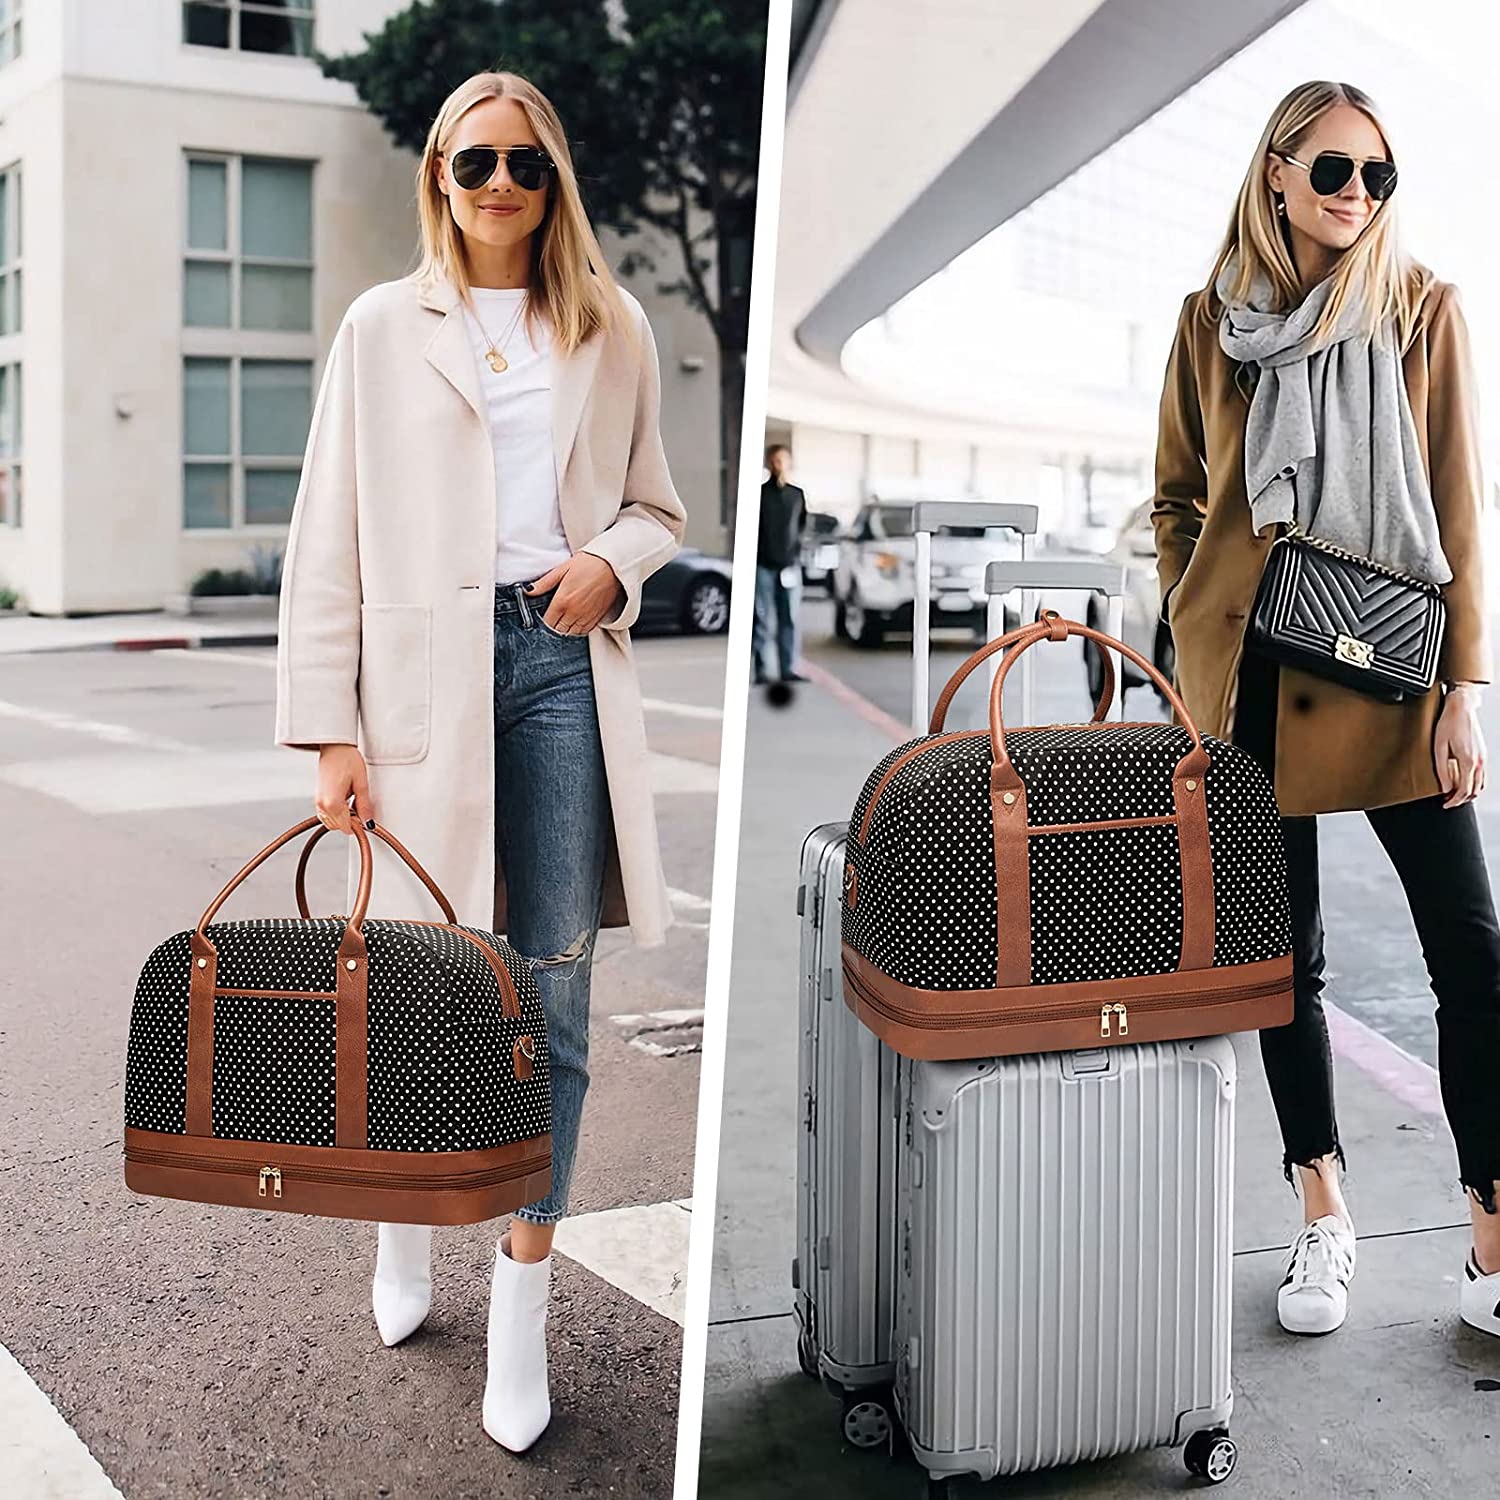 Louis Vuitton Duffel bags and weekend bags for Women